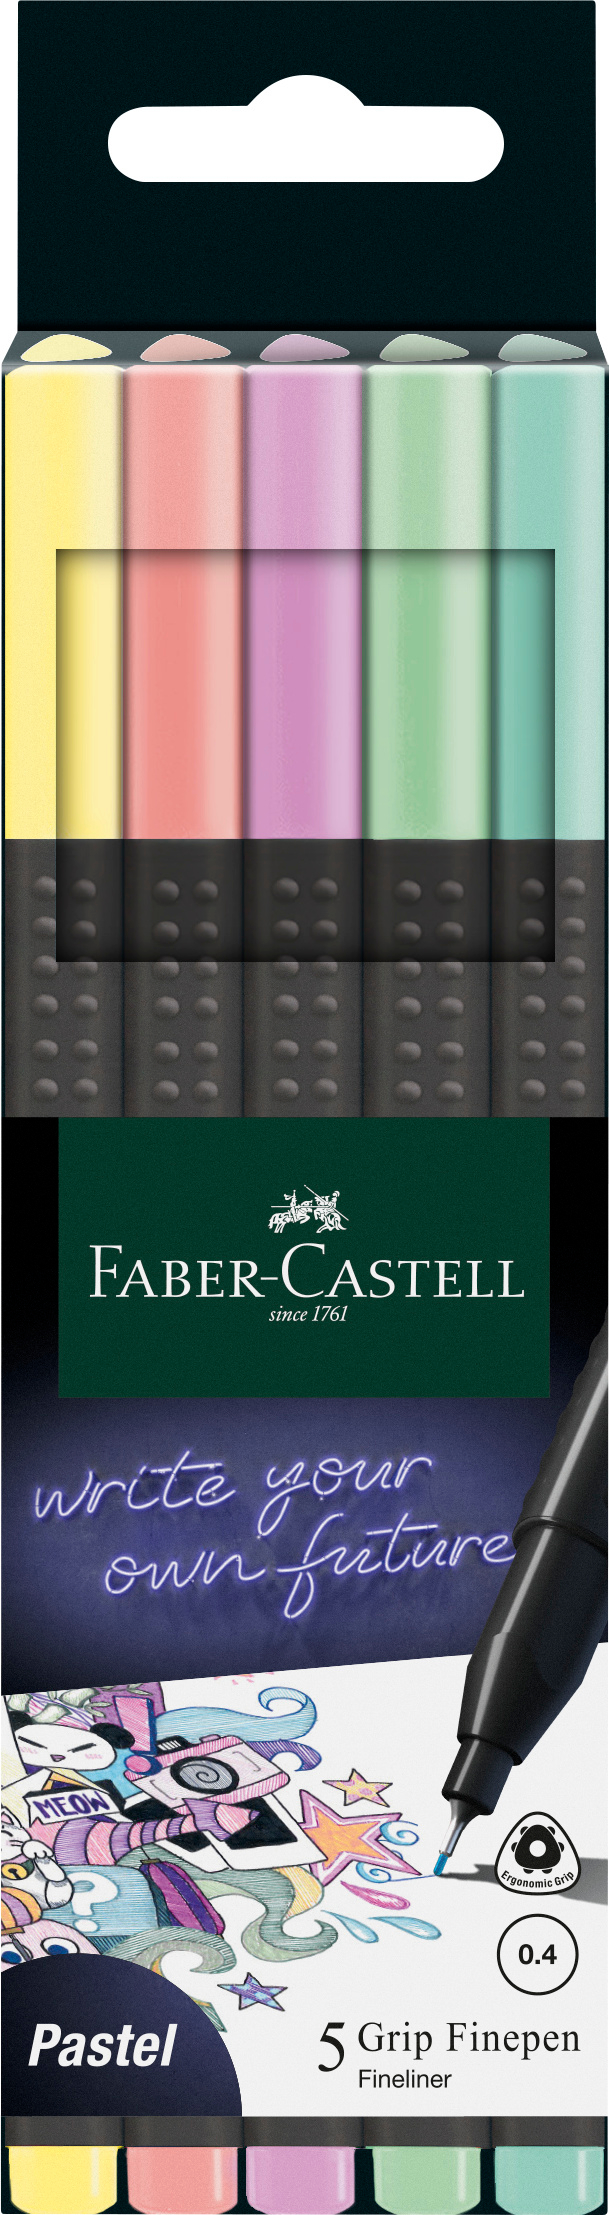 FABER-CASTELL Finepen Grip 0.4mm 151602 5 couleurs, pastel